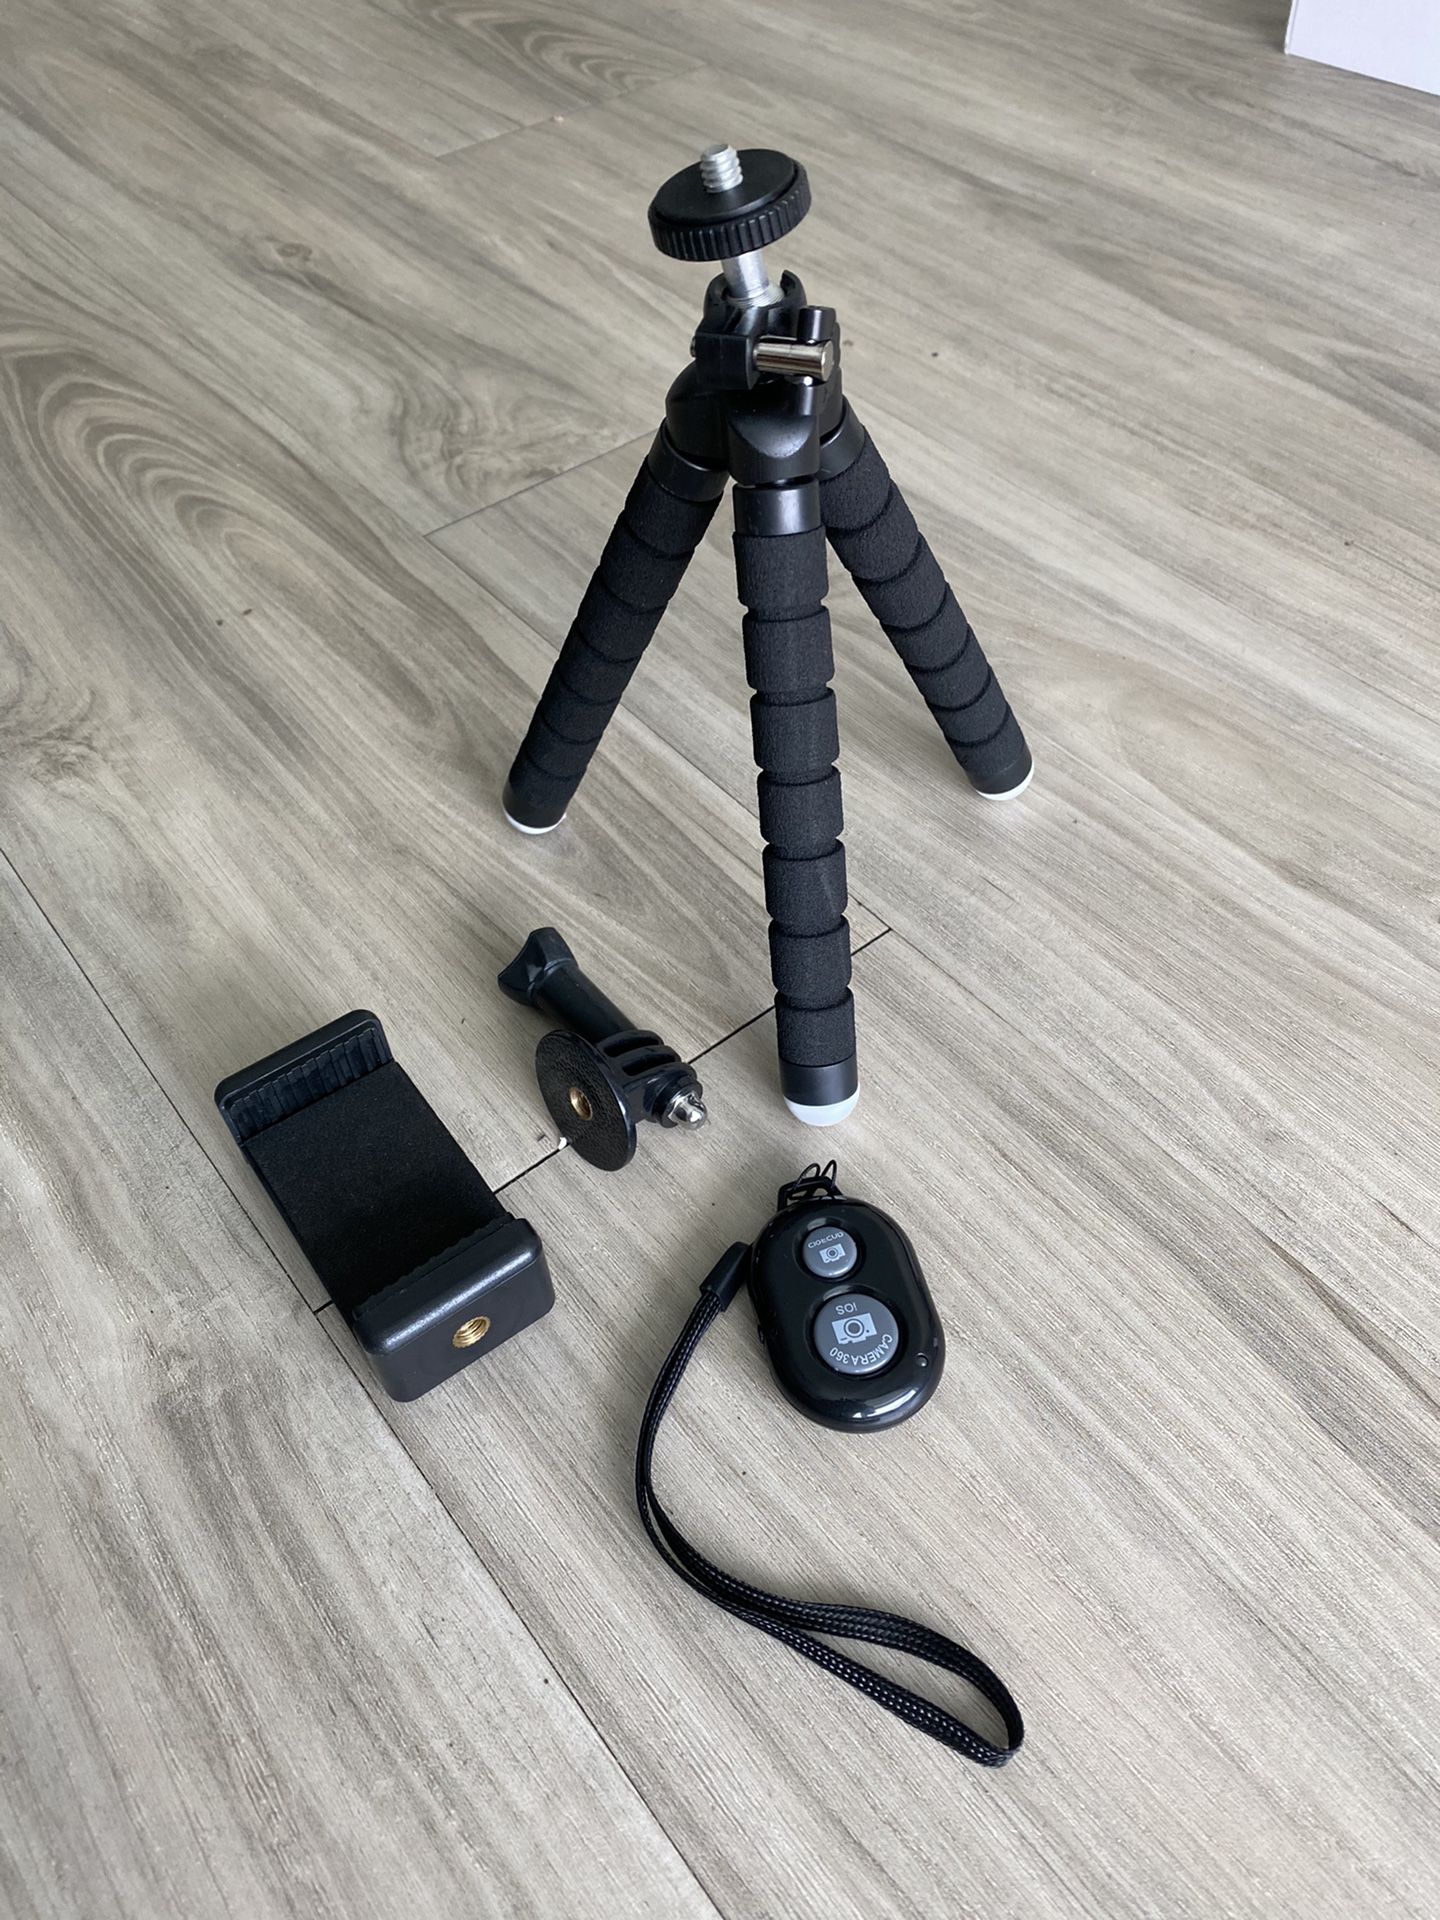 Smartphone/camera flexible tripod with Bluetooth remote